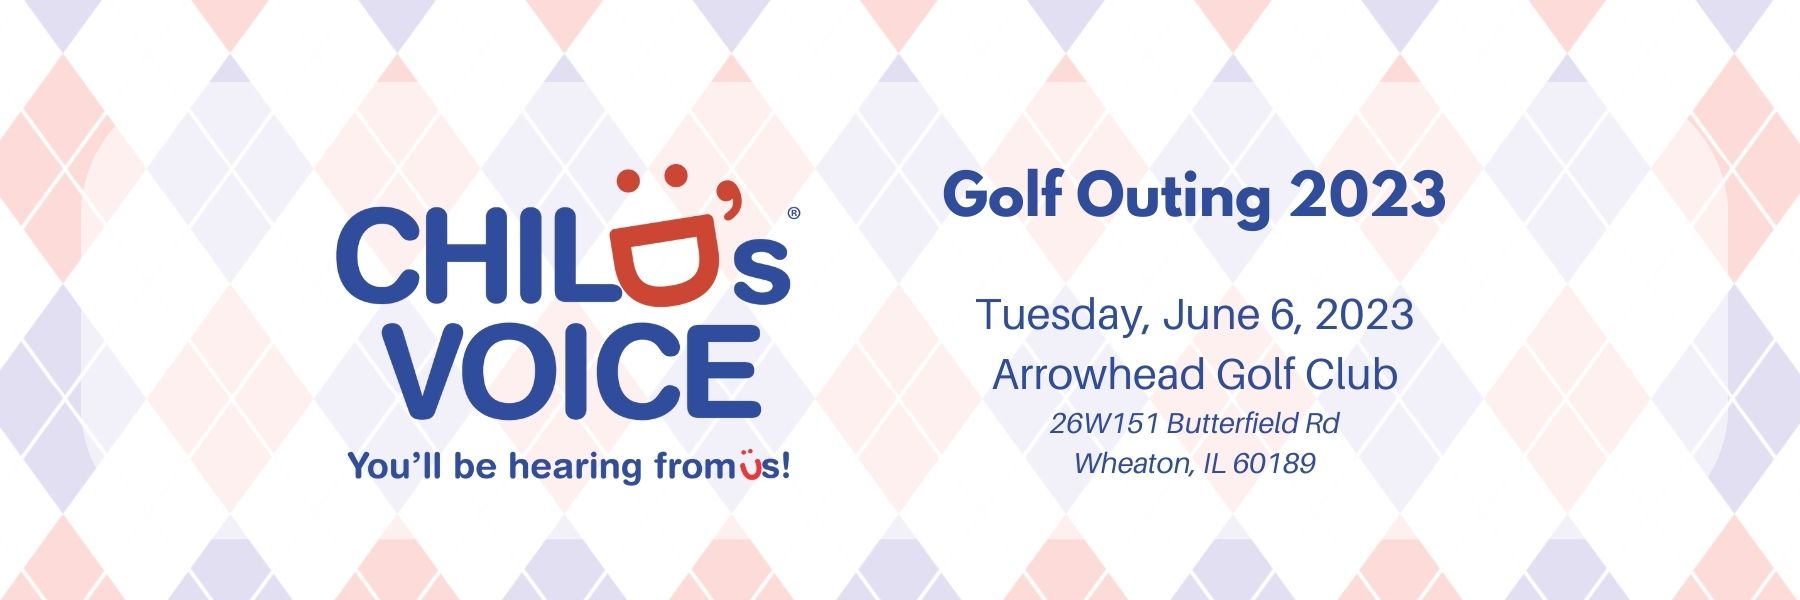 Child's Voice Golf Outing June 6, 2023 Arrowhead Golf Club Wheaton Illinois